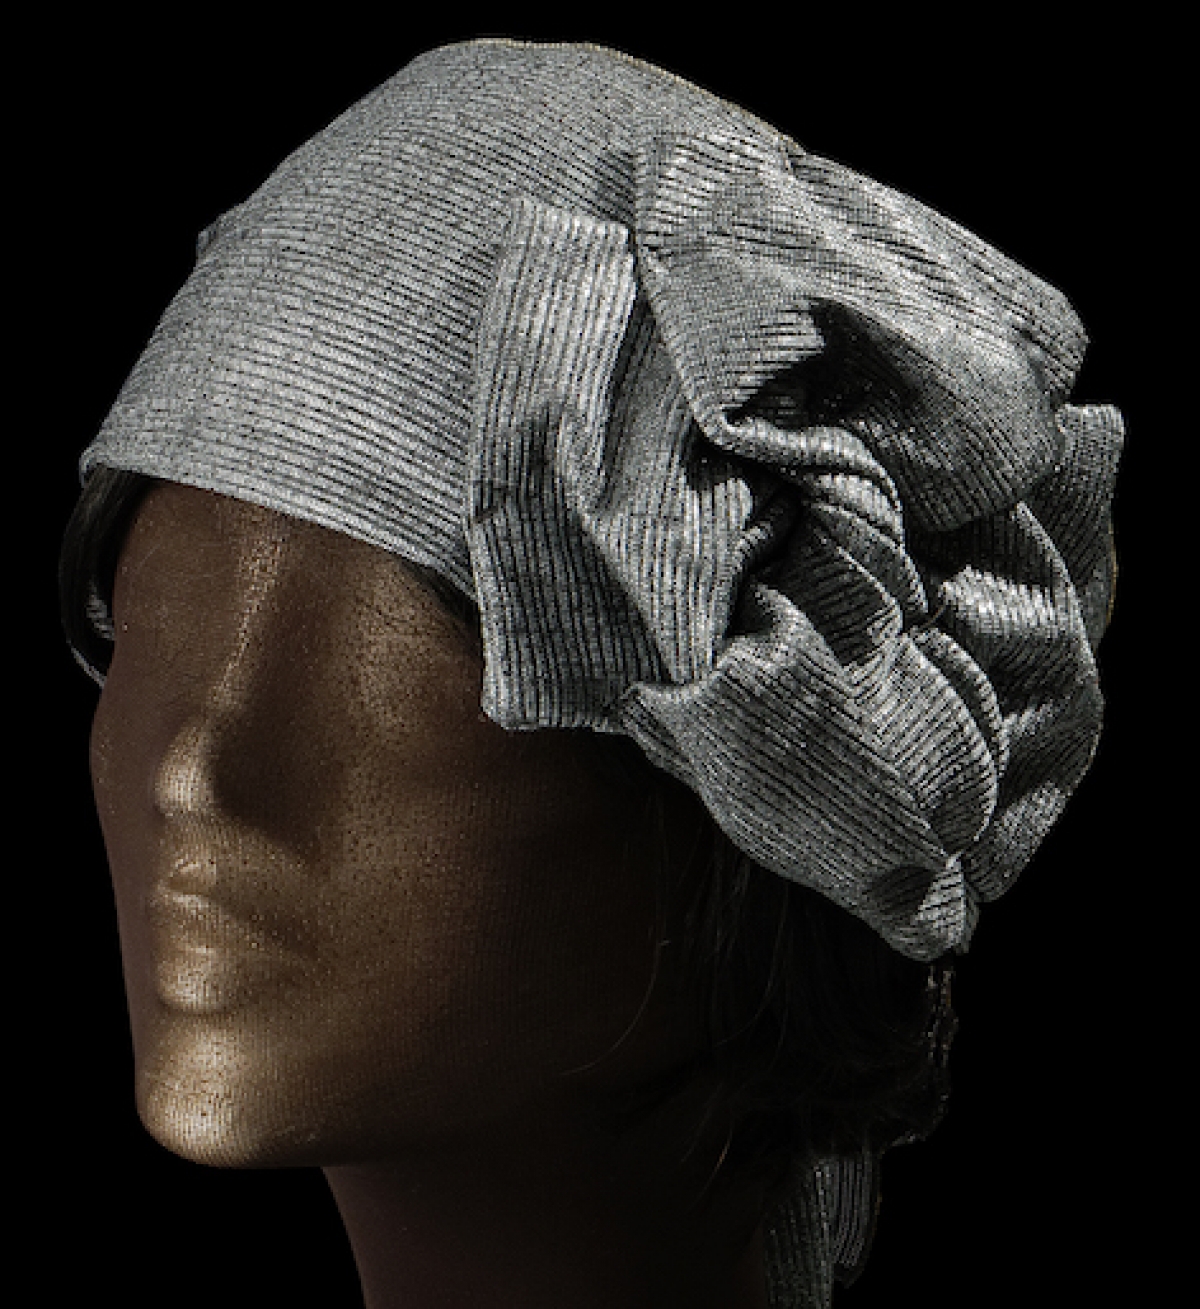 Fashionable headband for an orthodox Jewish woman.